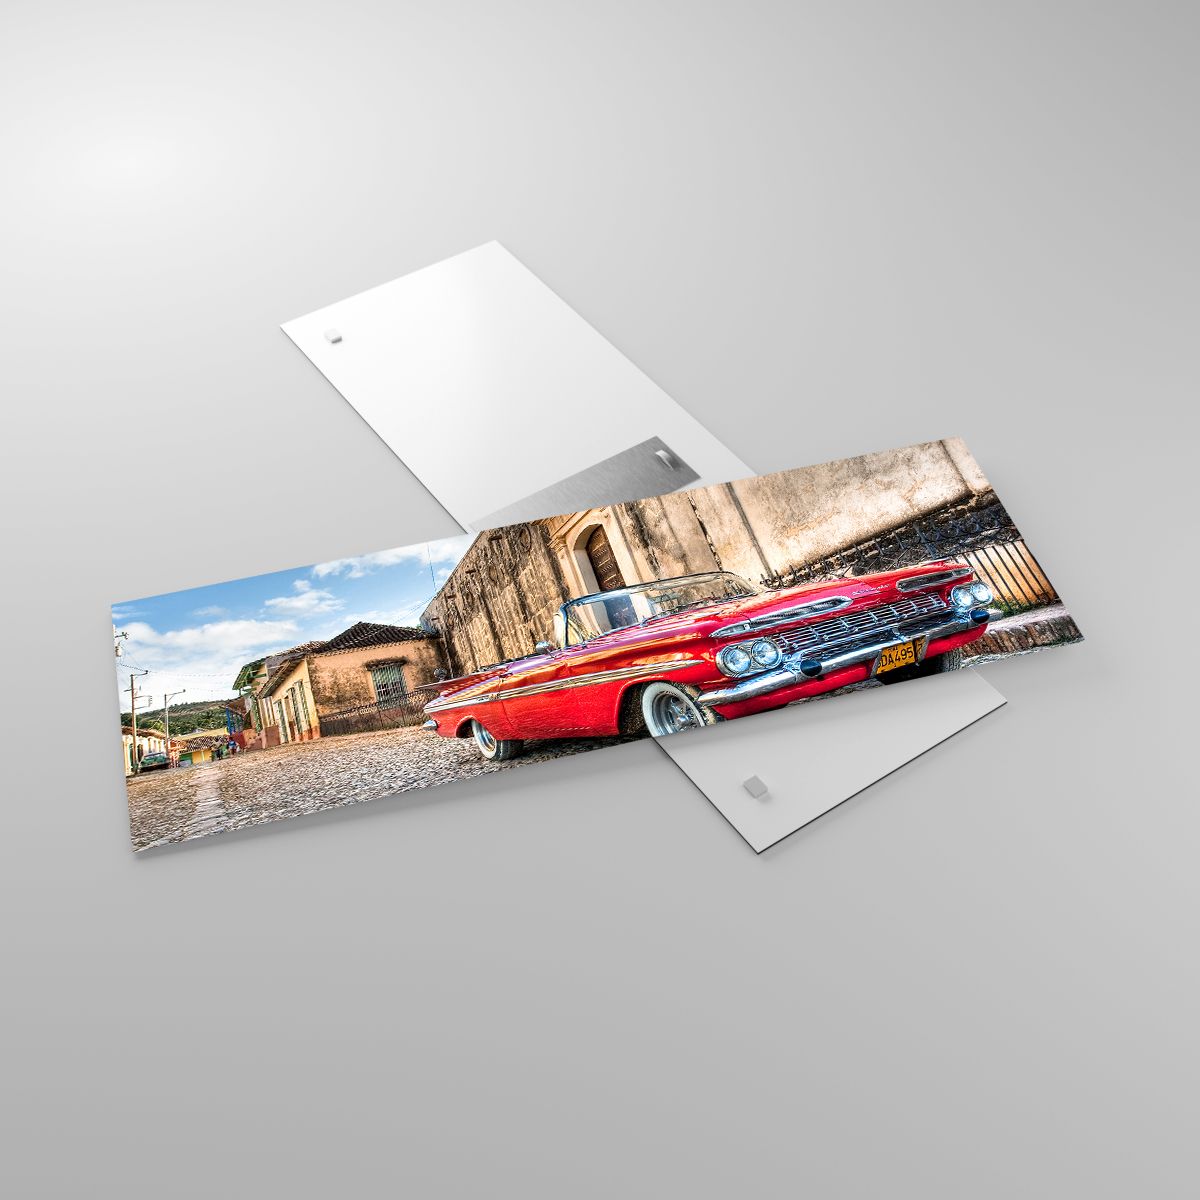 Glasbild Automobil, Glasbild Auto, Glasbild Kuba, Glasbild Cabriolet, Glasbild Altes Auto